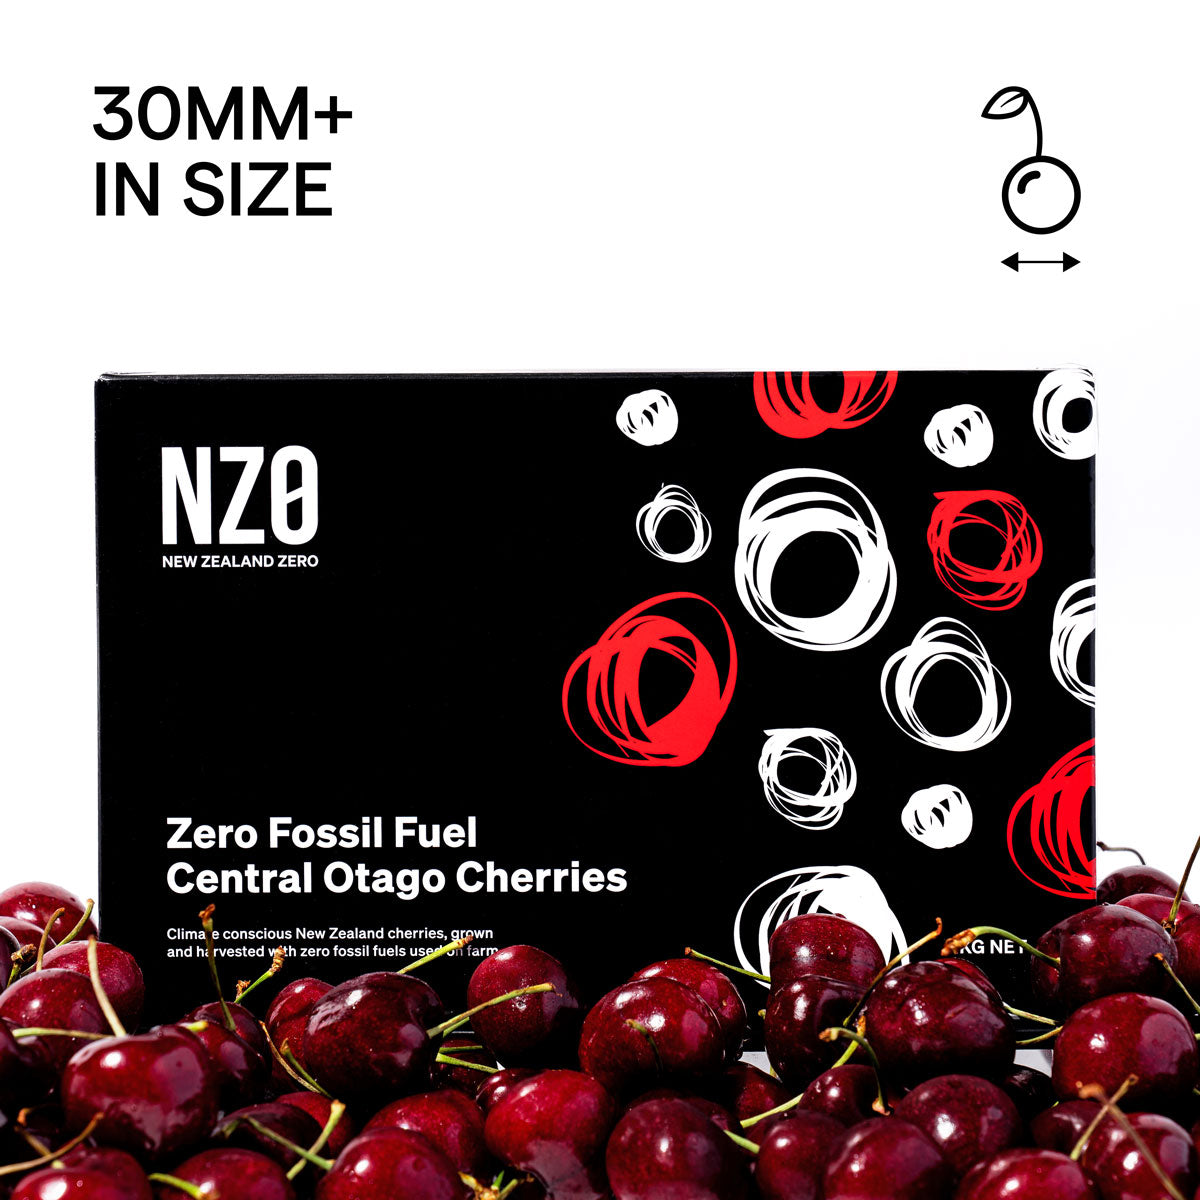 2KG Central Otago Cherries. 30MM+ or larger.